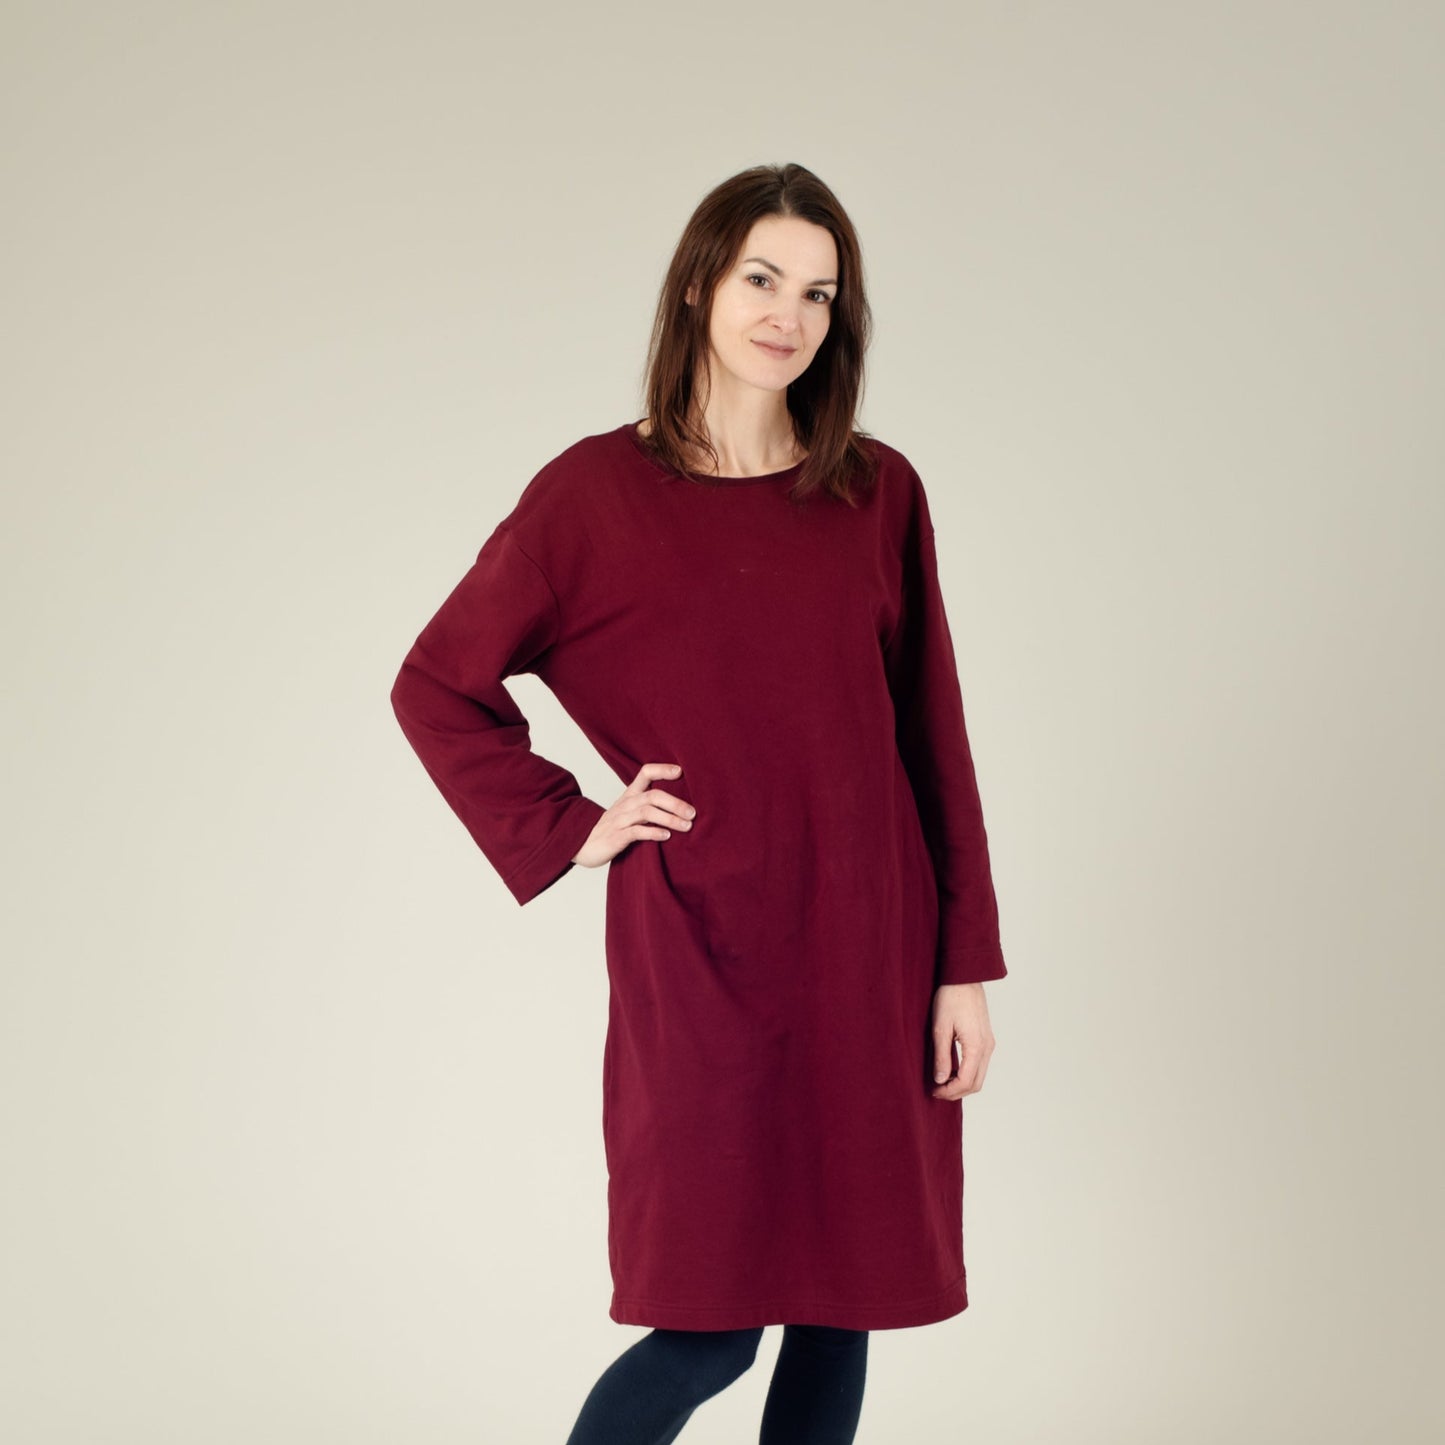 T-Shirt-Kleid Damen Bordeaux Rot, Vorderansicht, Urheber: Mini & Eve